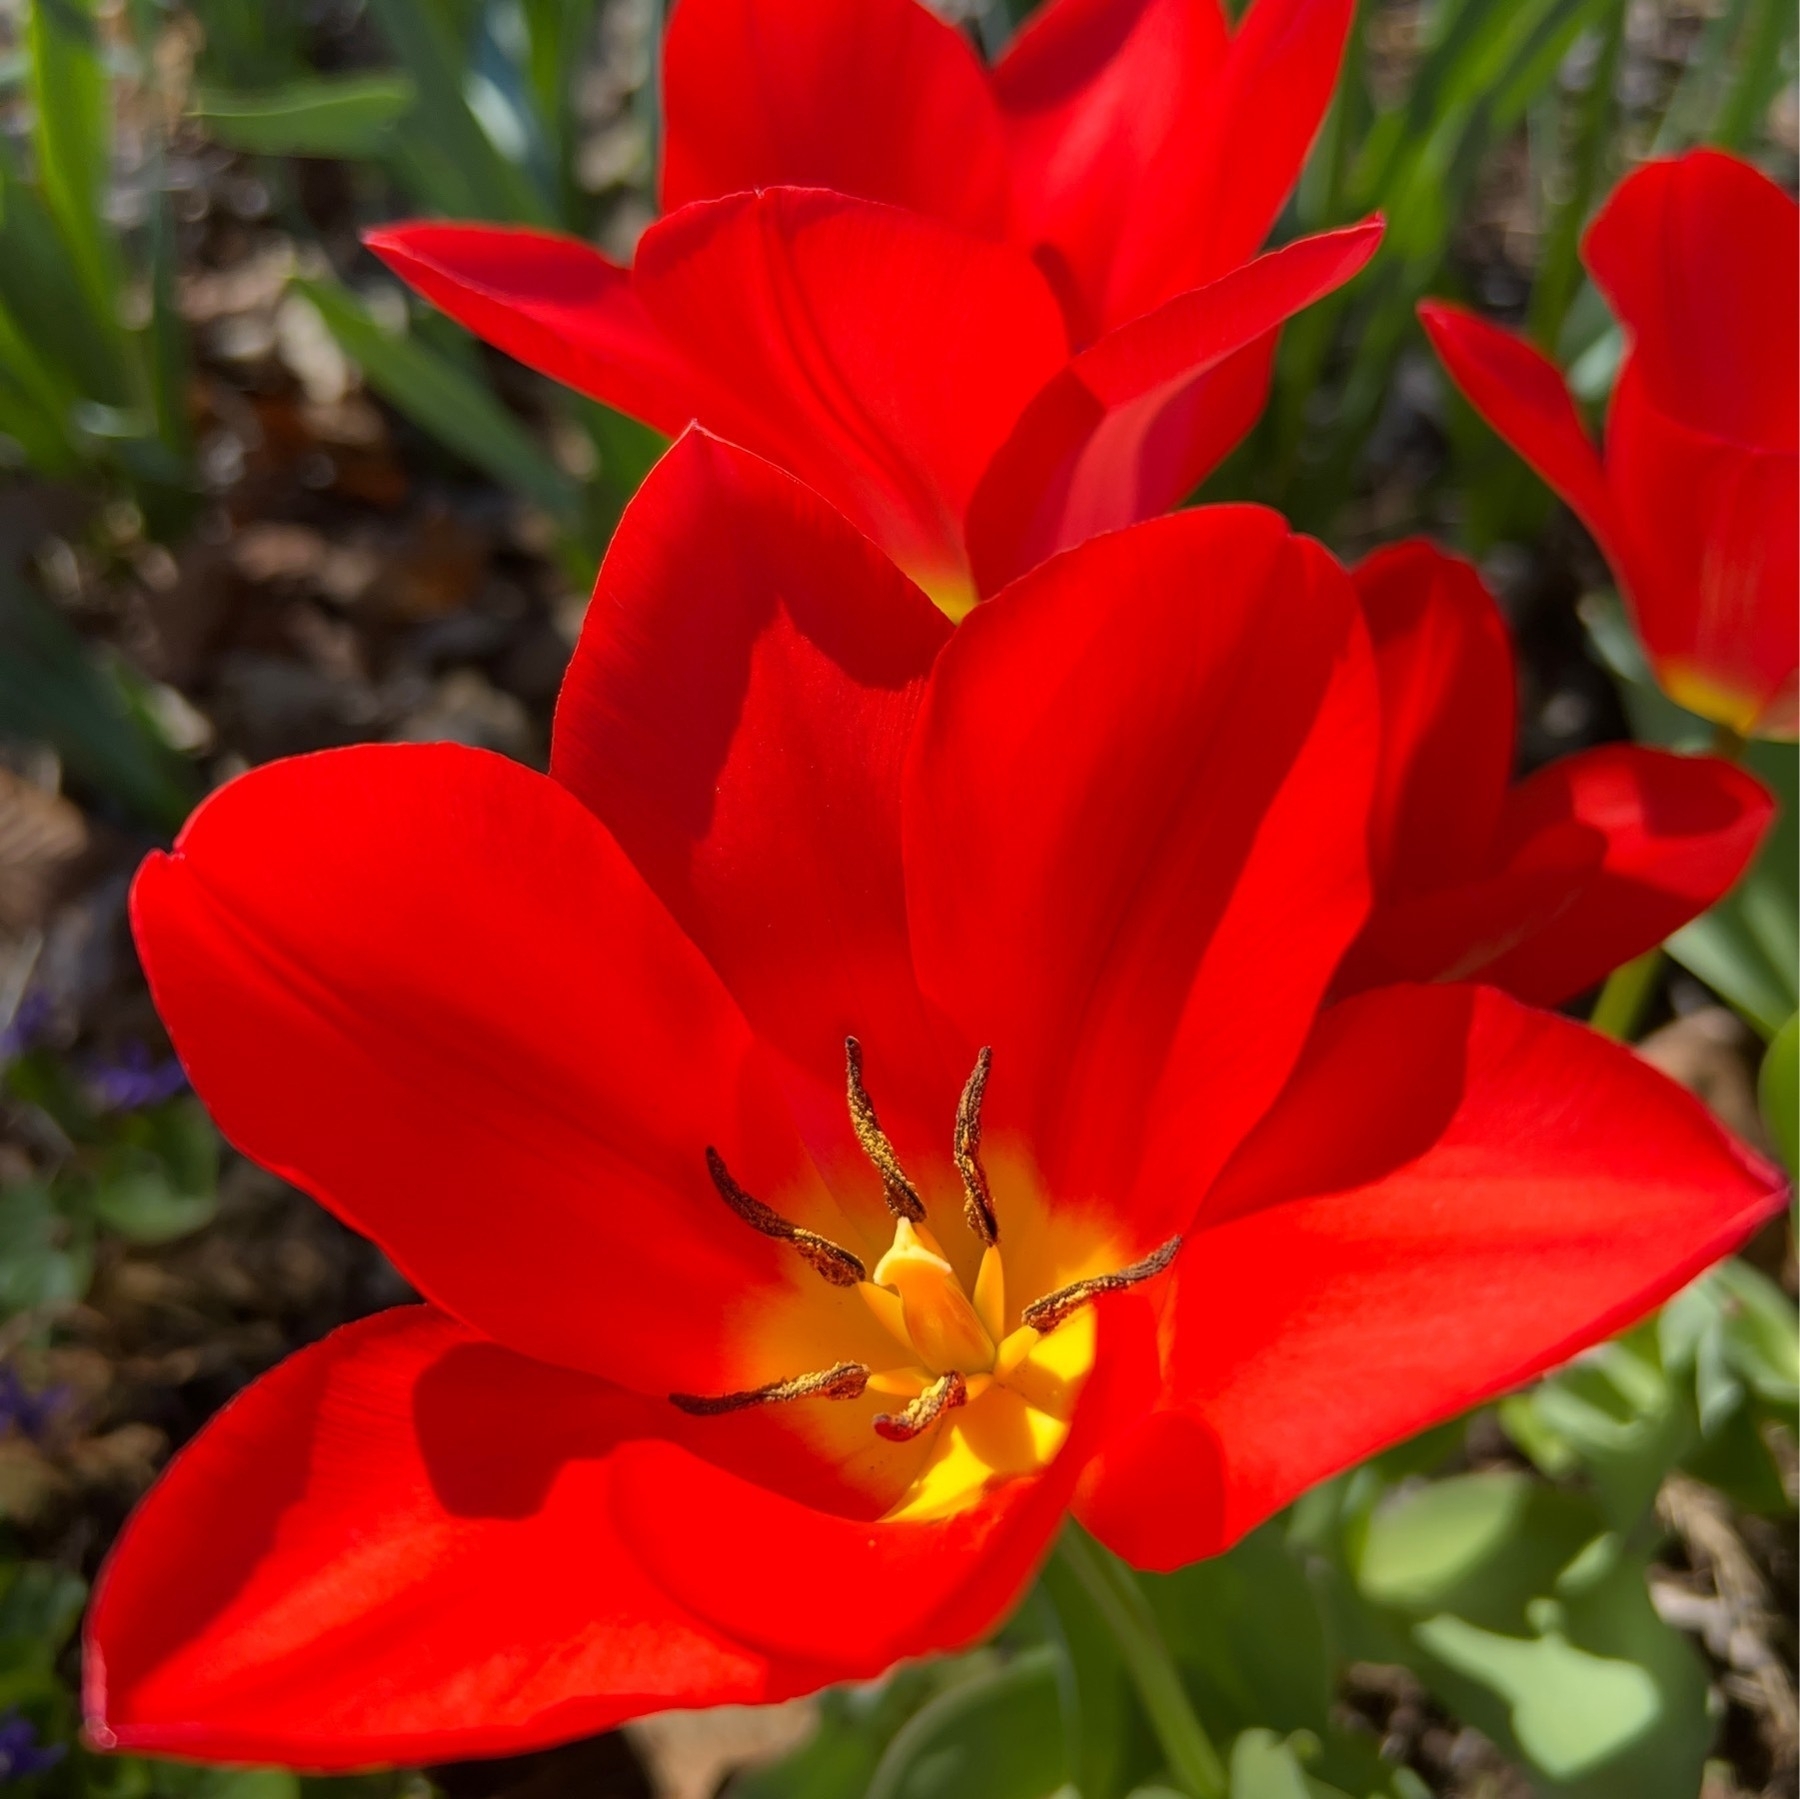 Red tulip flower opened. 